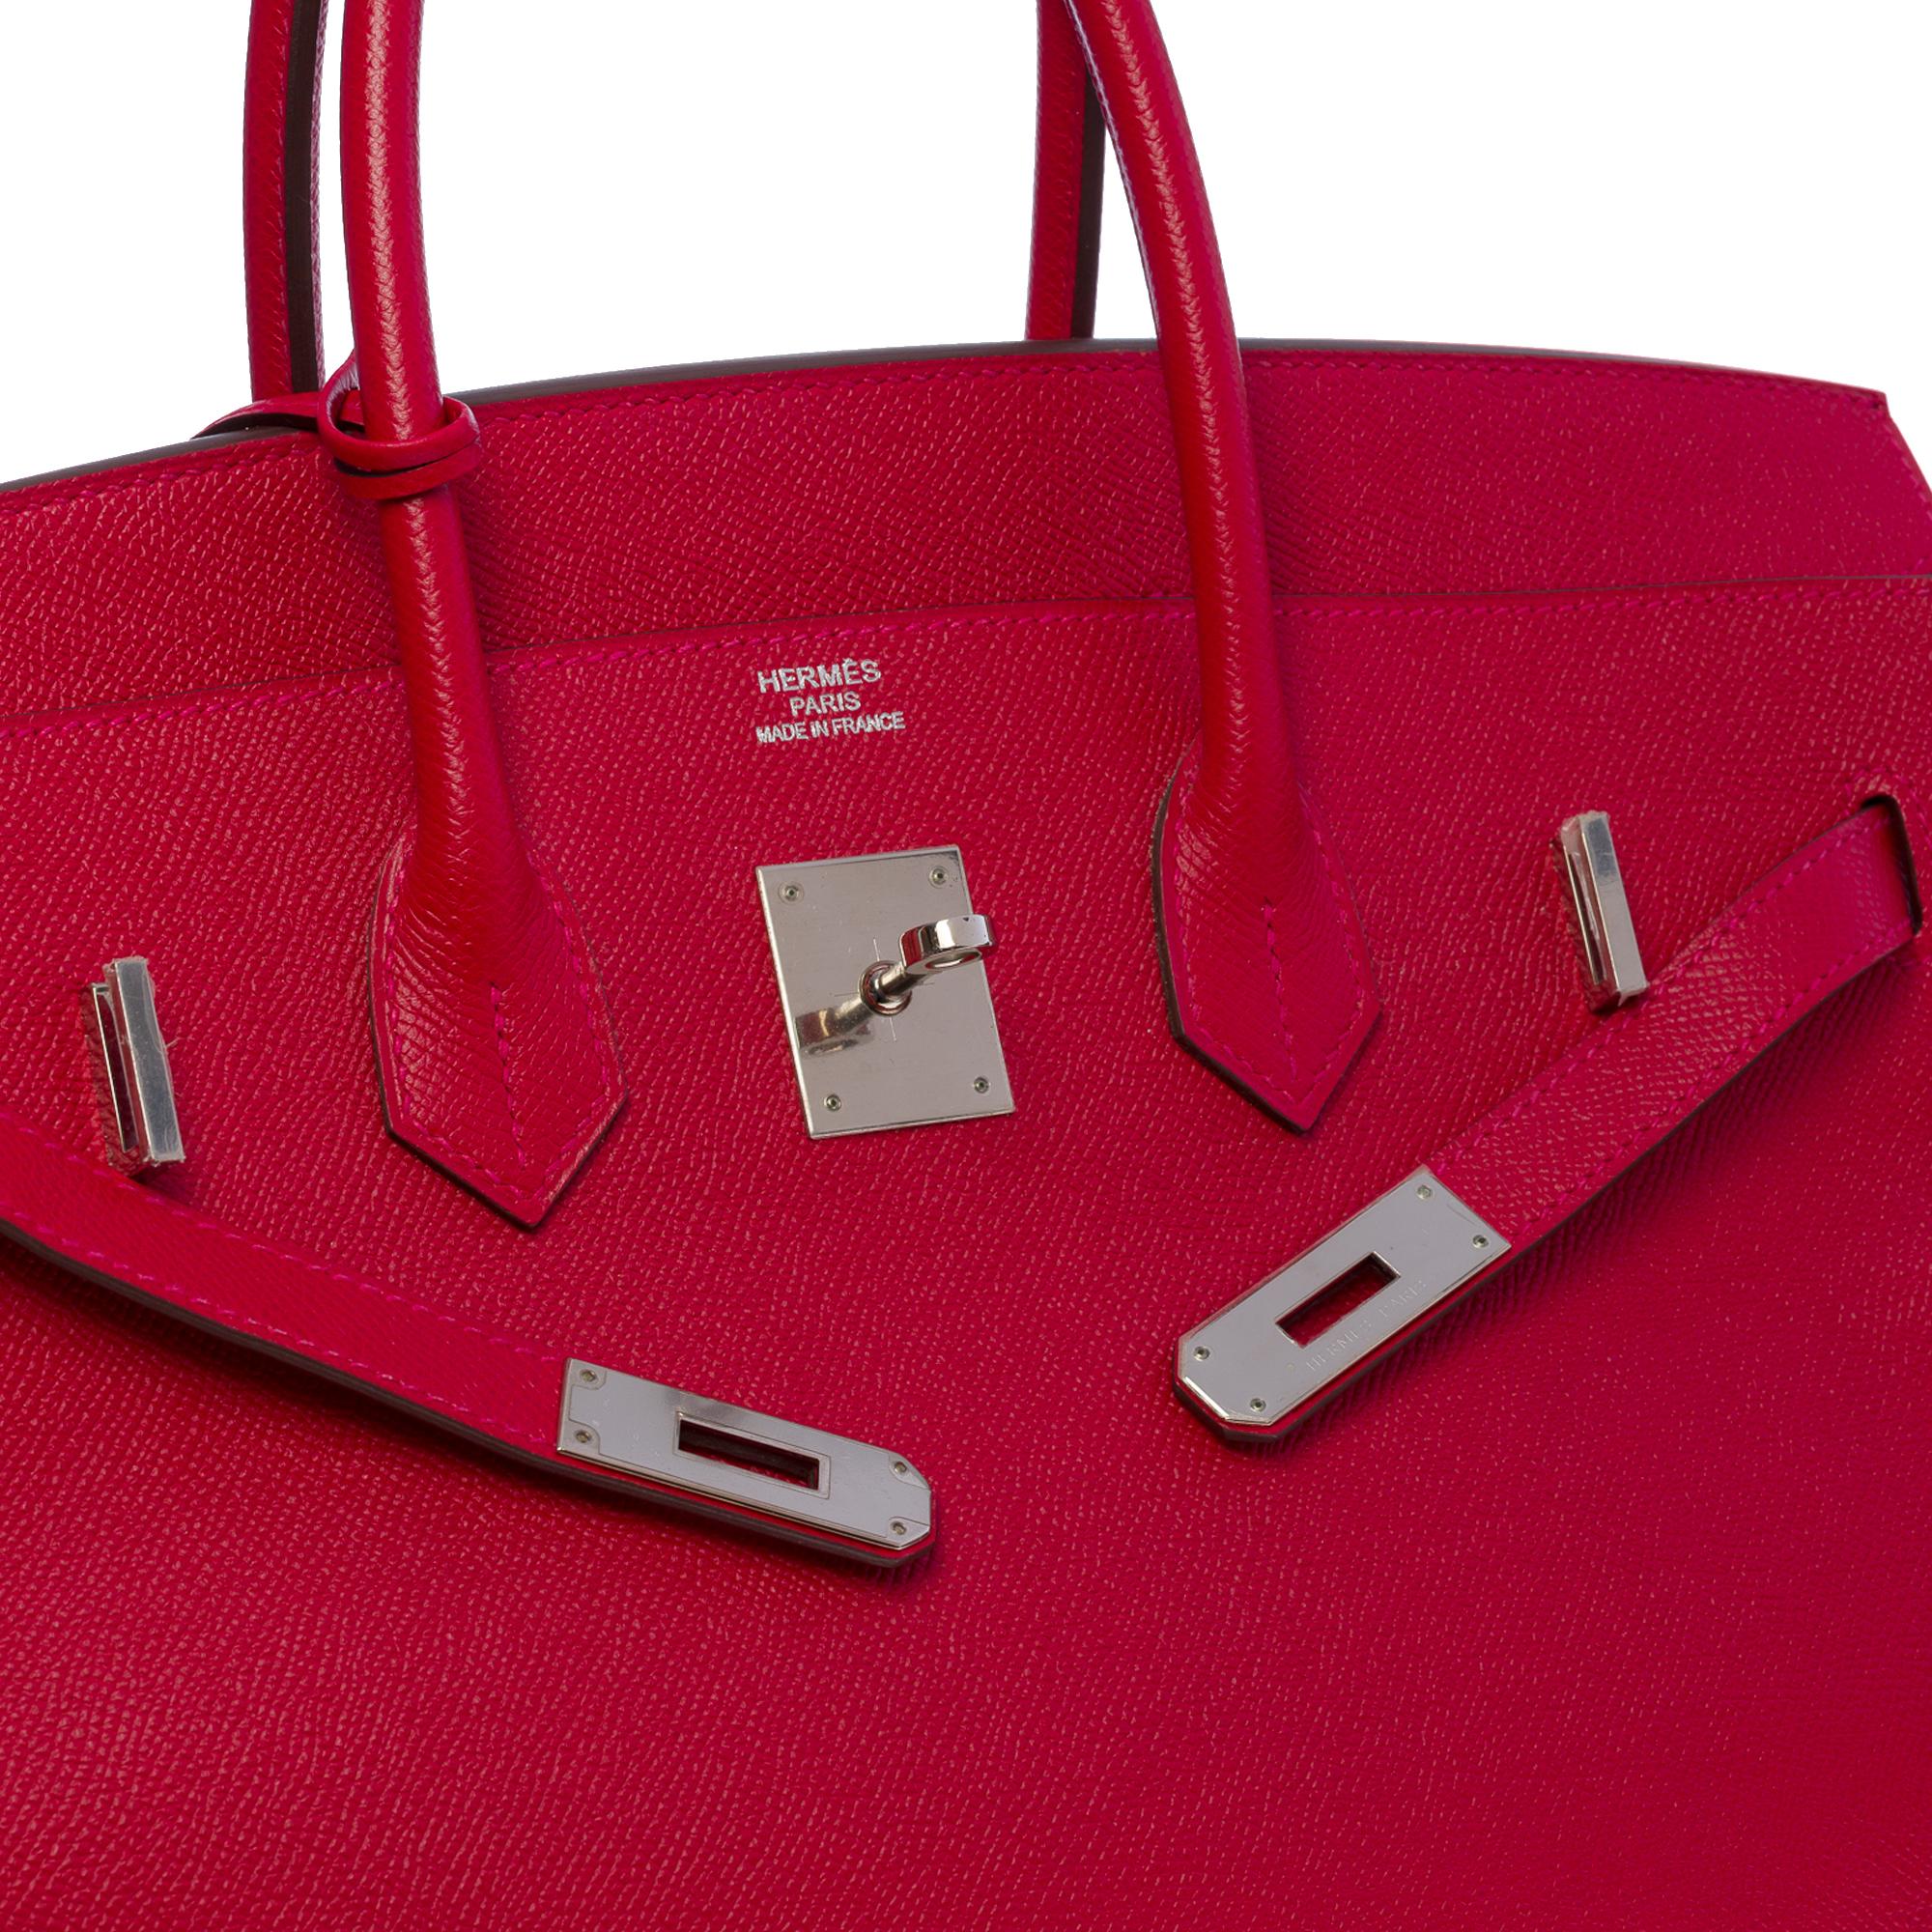 Stunning Hermès Birkin 35 handbag in Rouge Casaque Epsom leather, SHW 1